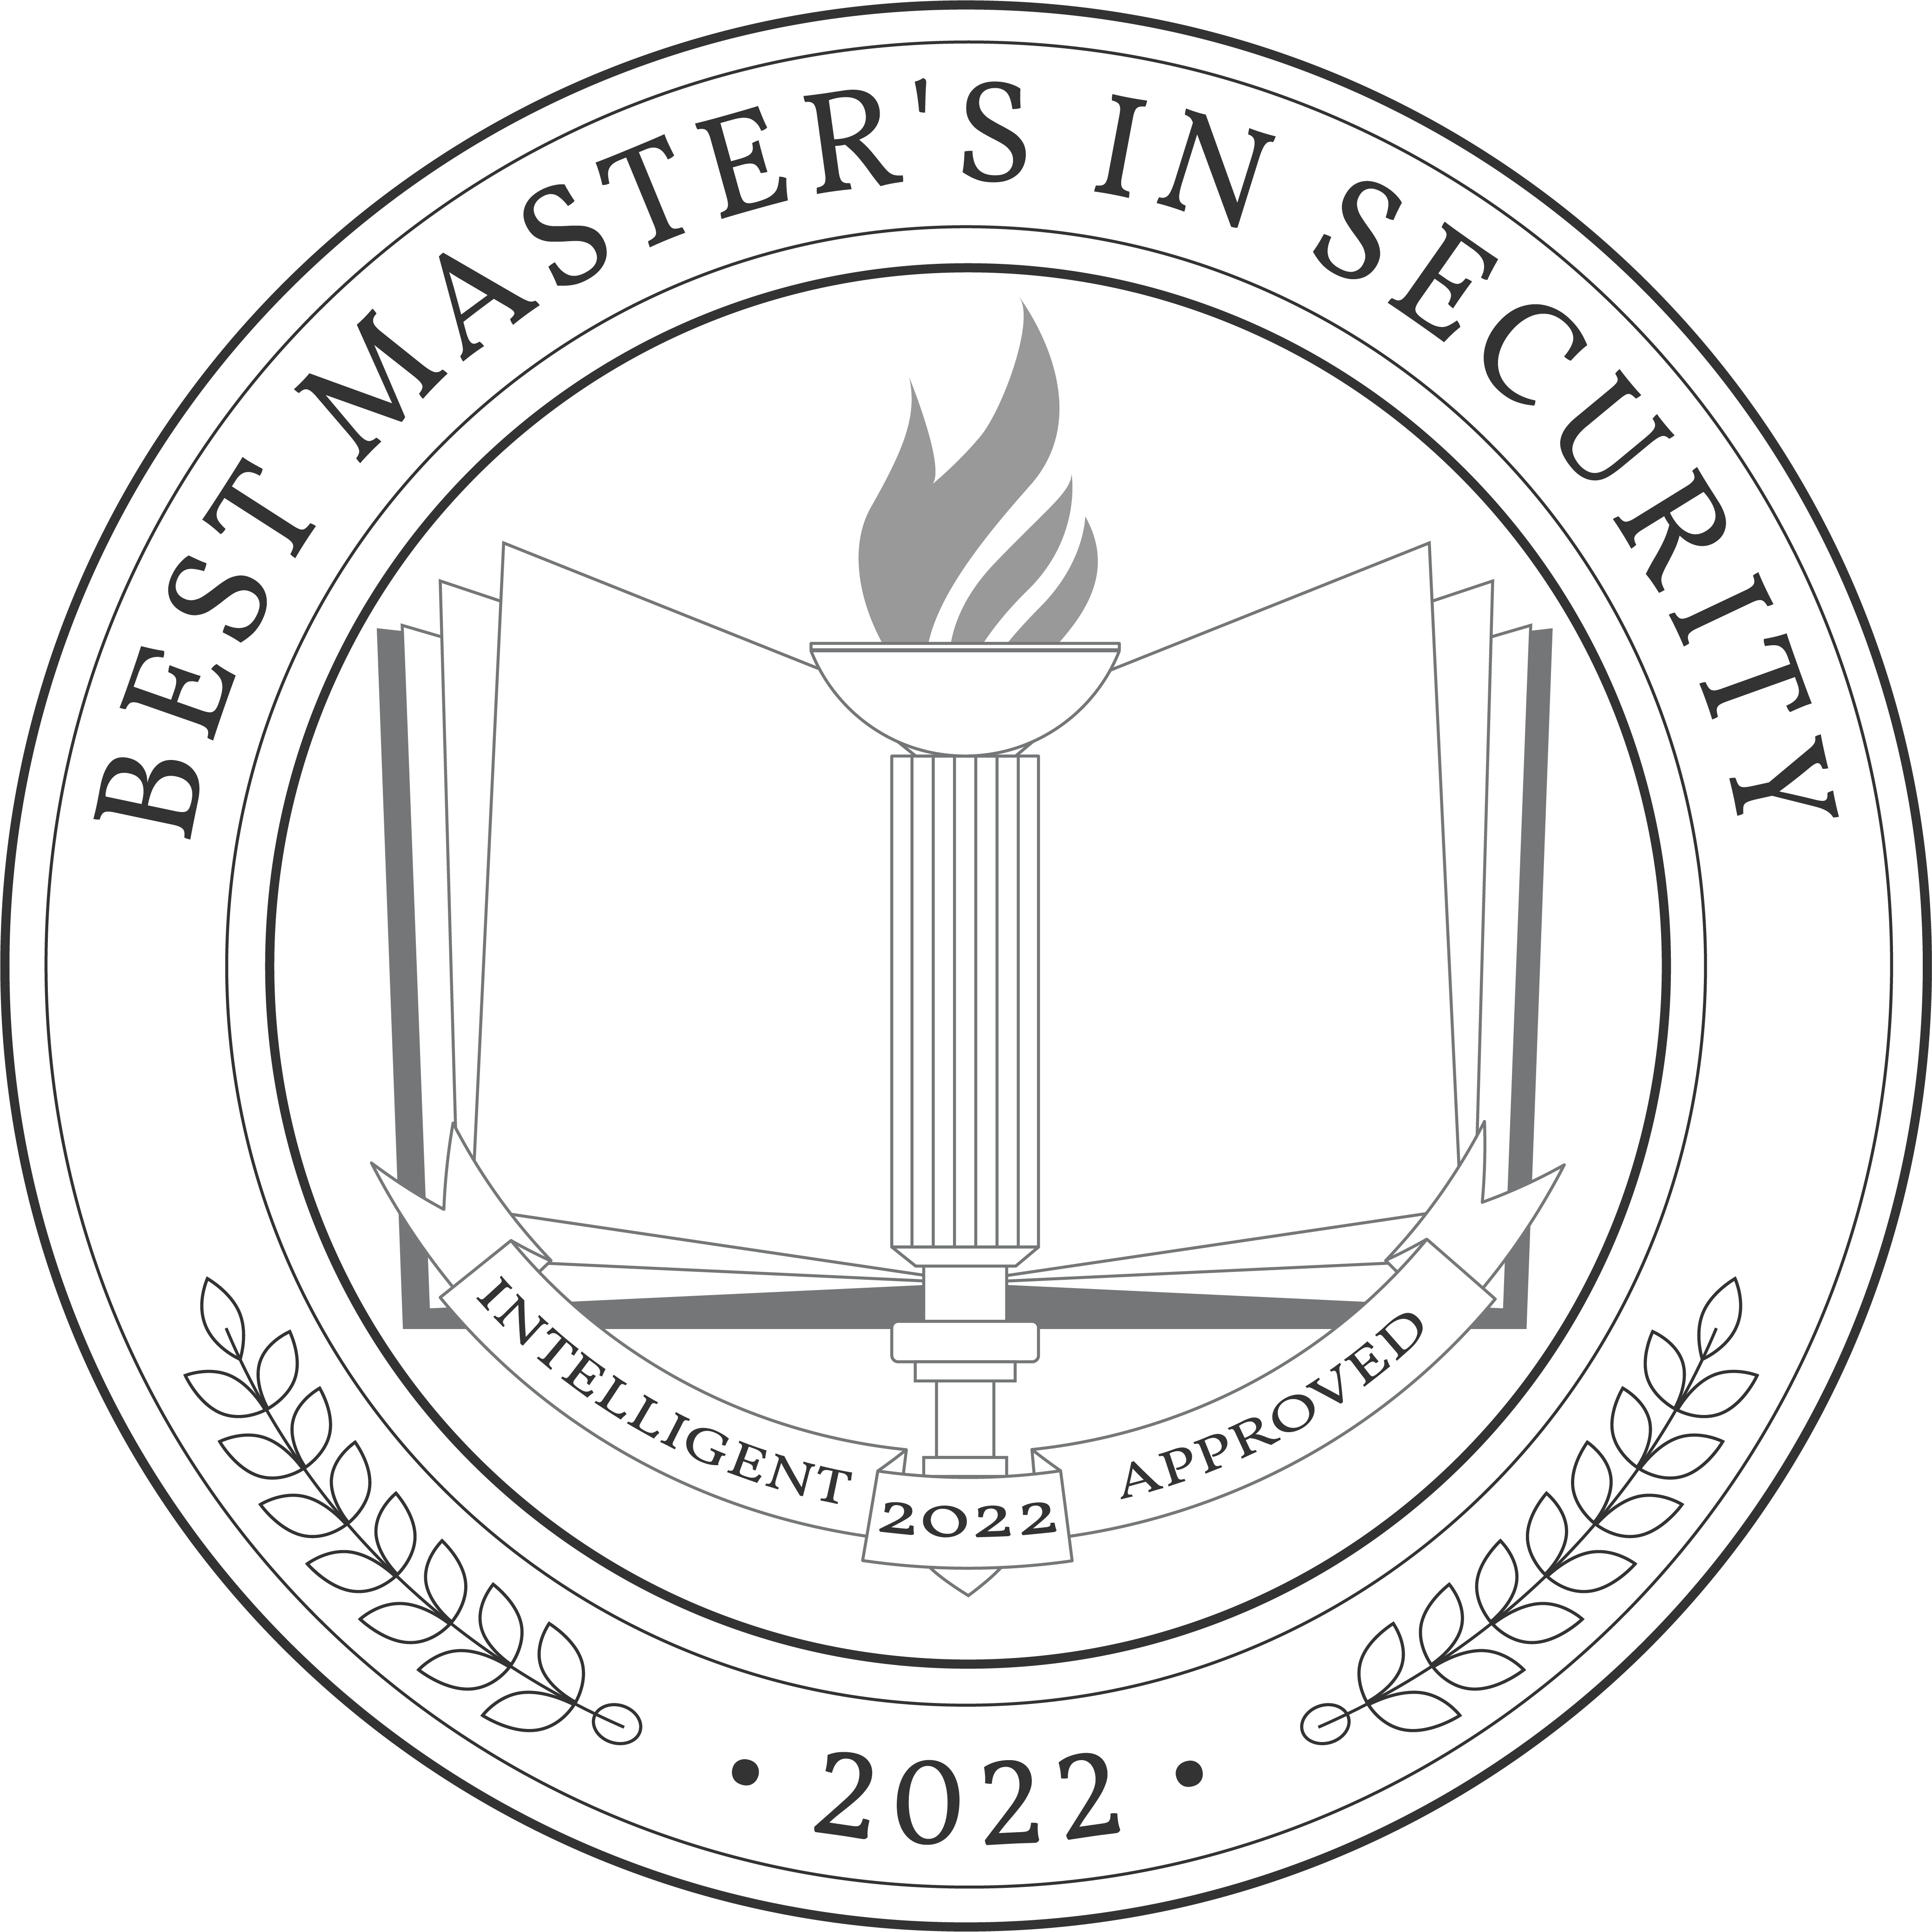 Best Master's in Security Badge